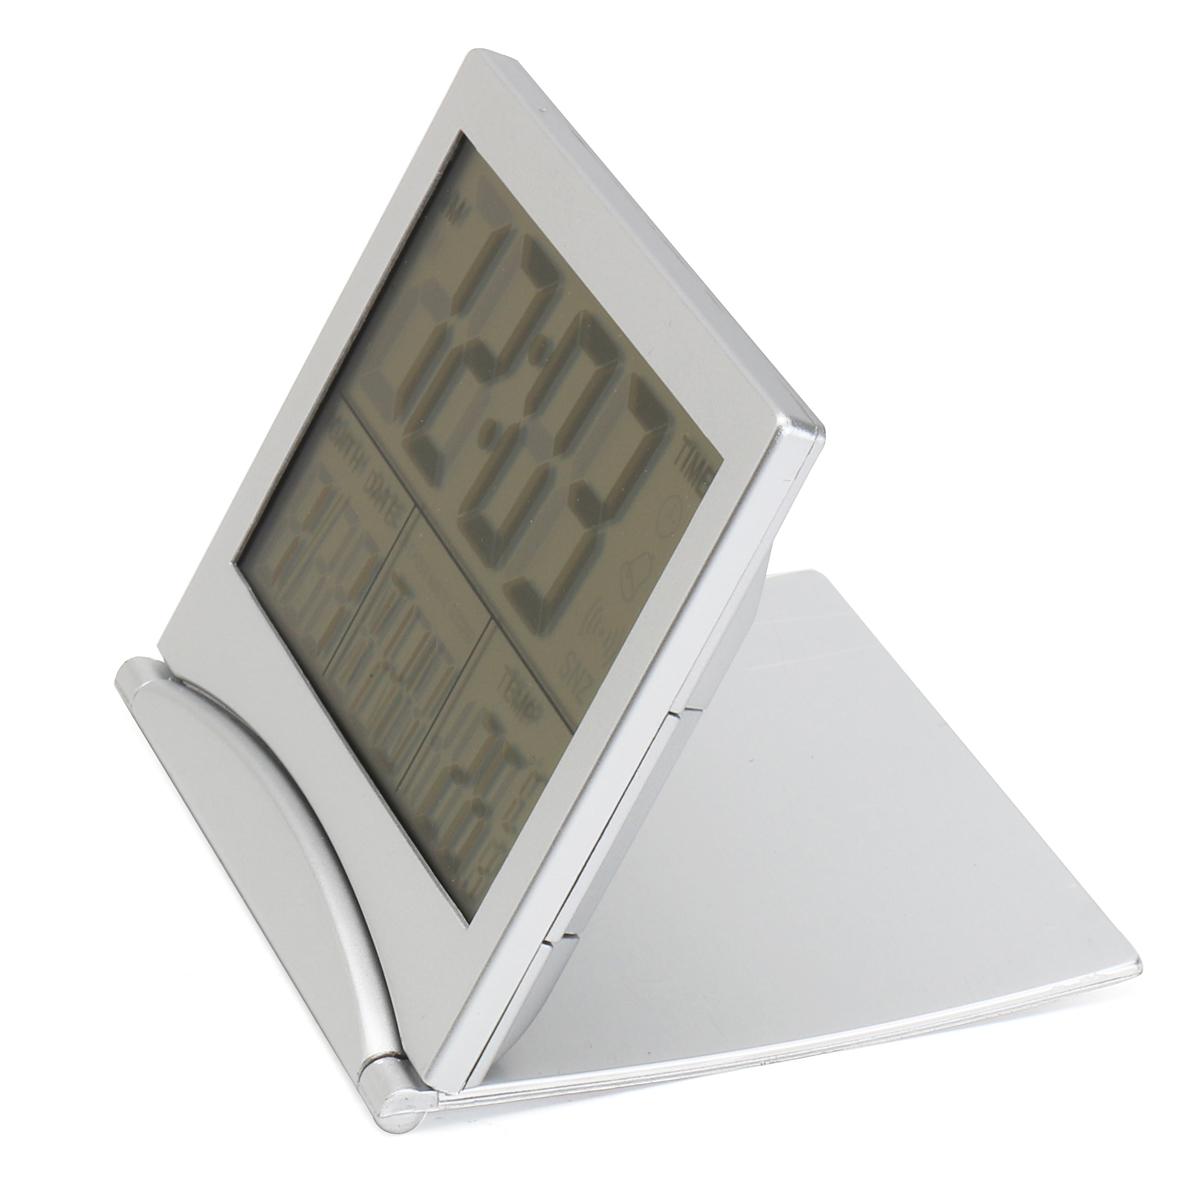 Digital-LCD-Screen-Travel-Alarm-Clocks-Table-Desk-Thermometer-Timer-Calendar-1164394-4